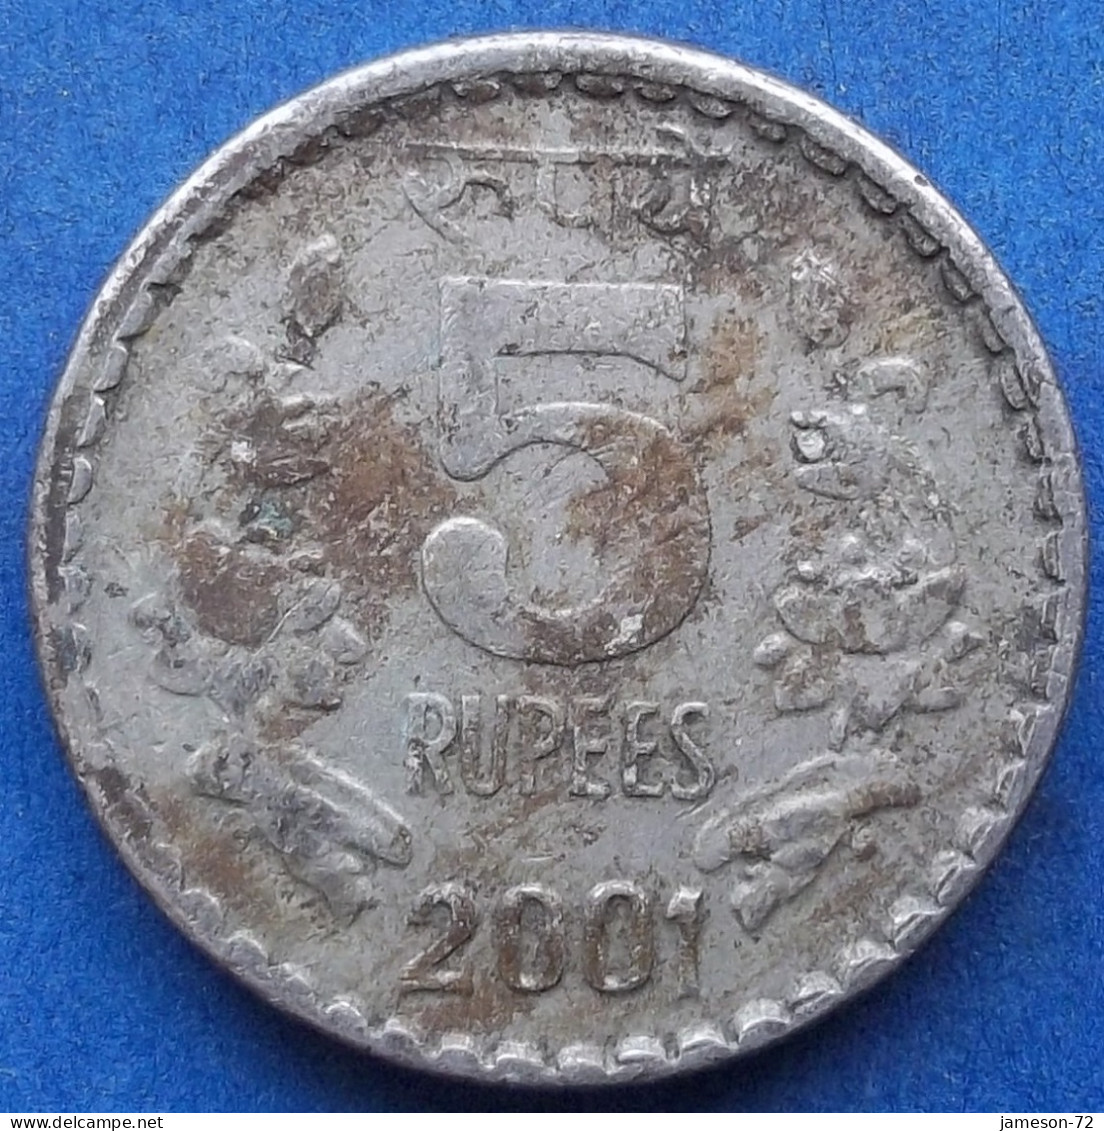 INDIA - 5 Rupees 2001 (C) "Lotus Flowers" KM# 154.2 Republic Decimal Coinage (1957) - Edelweiss Coins - Georgië